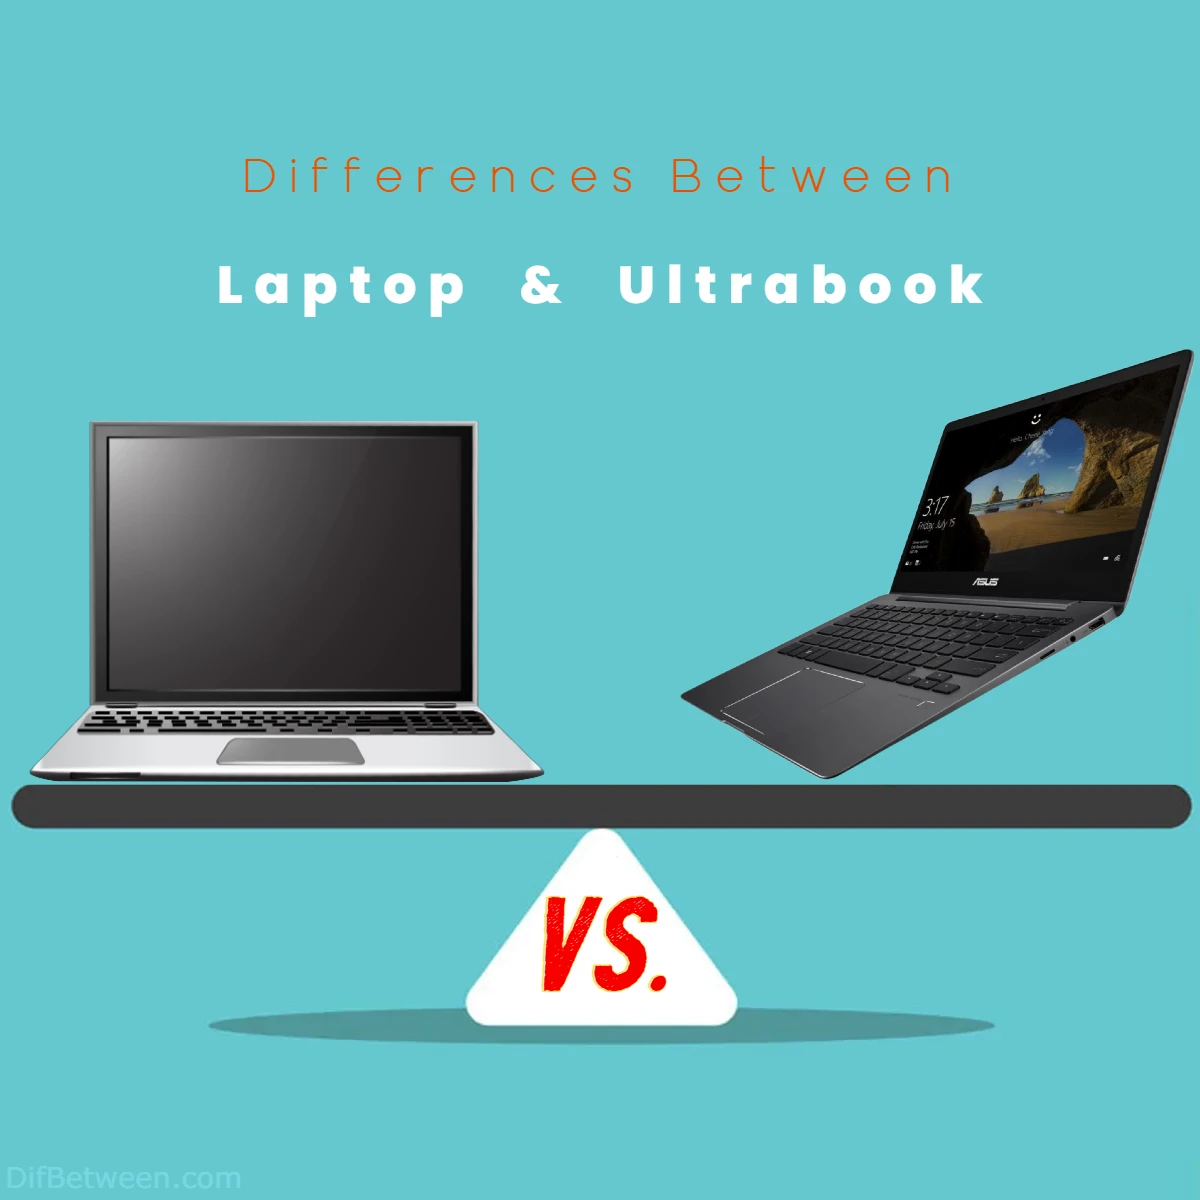 Differences Between Laptop vs Ultrabook